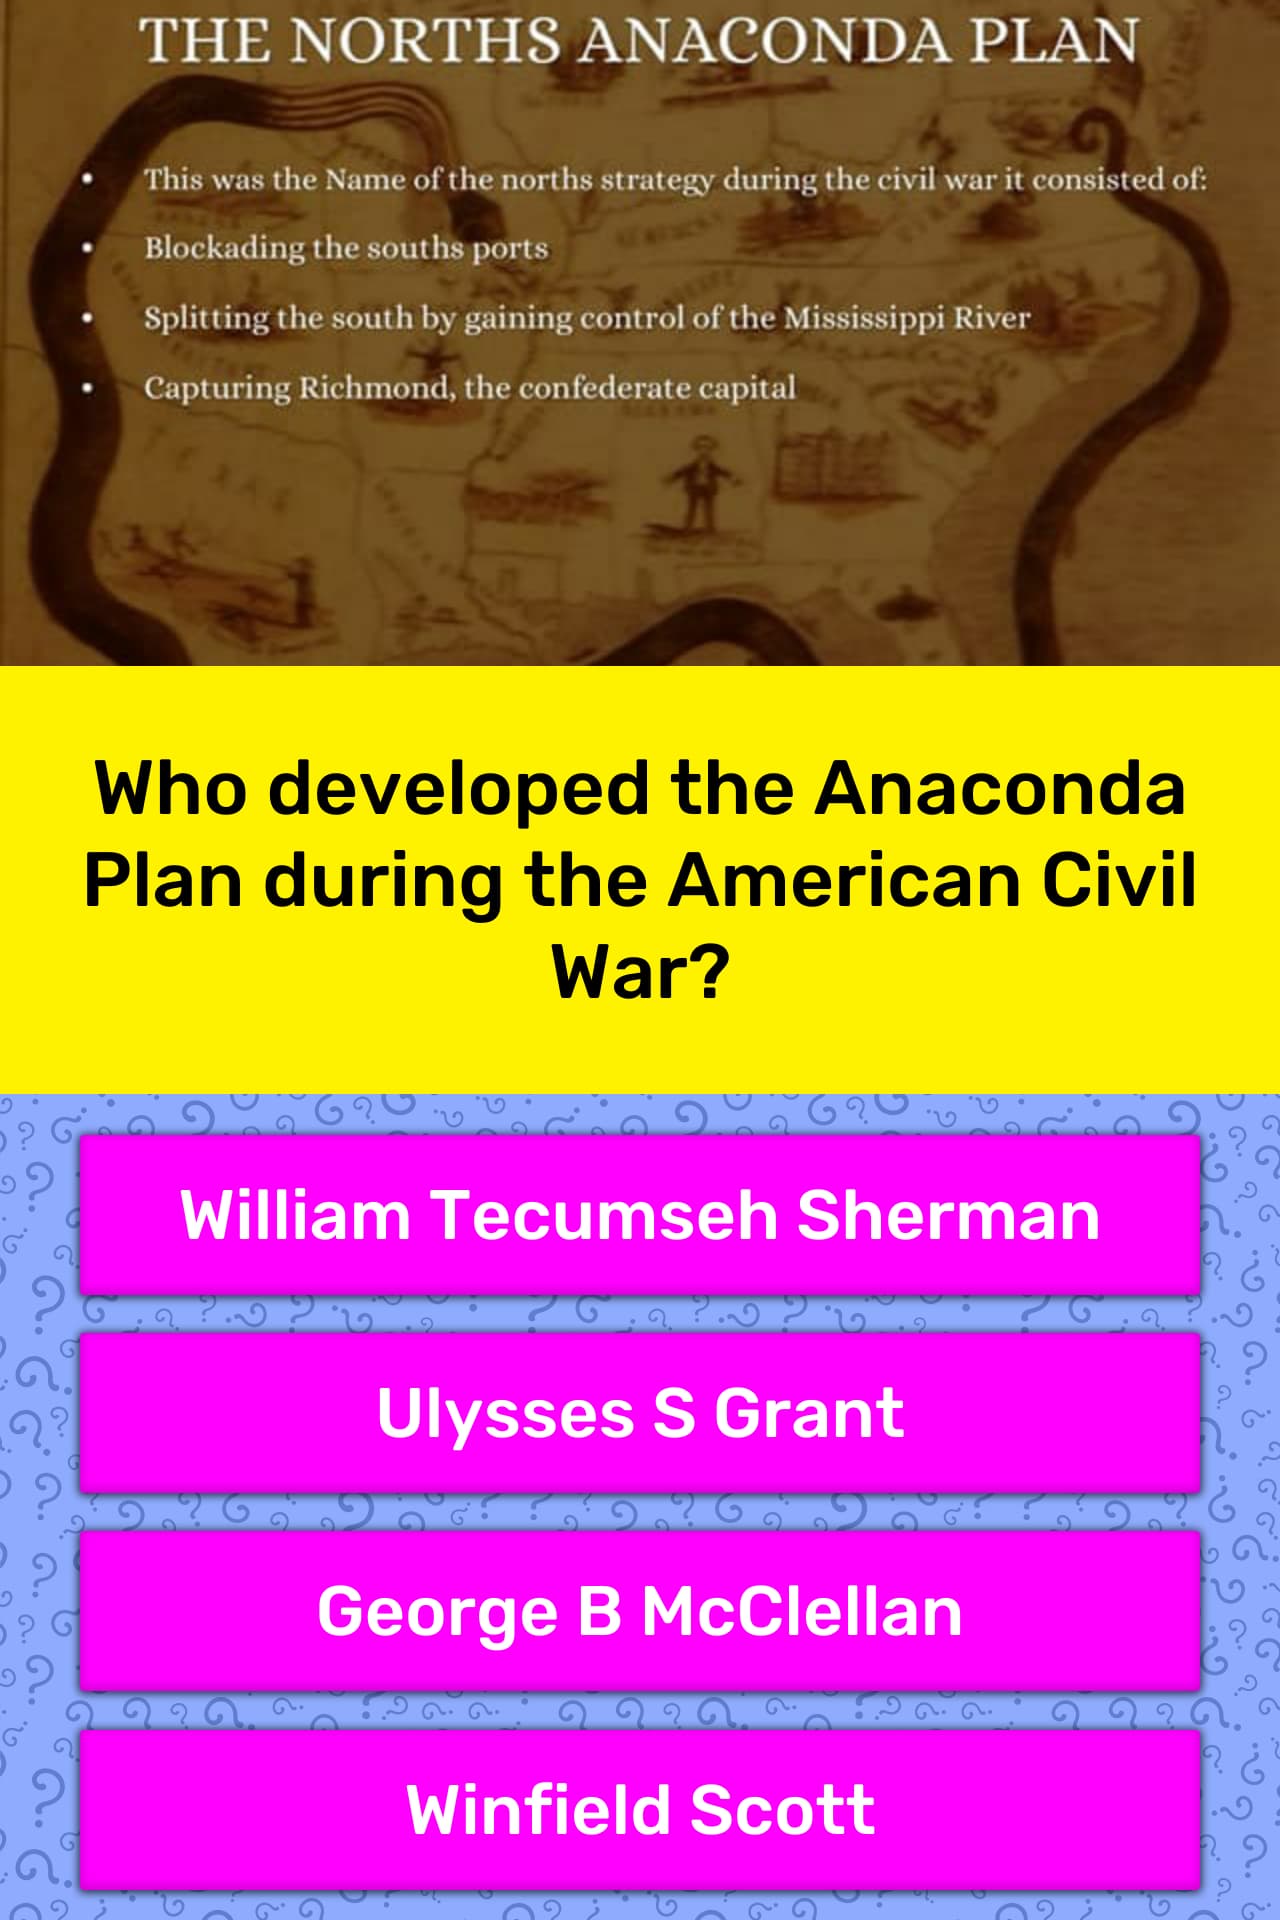 anaconda plan definition us history